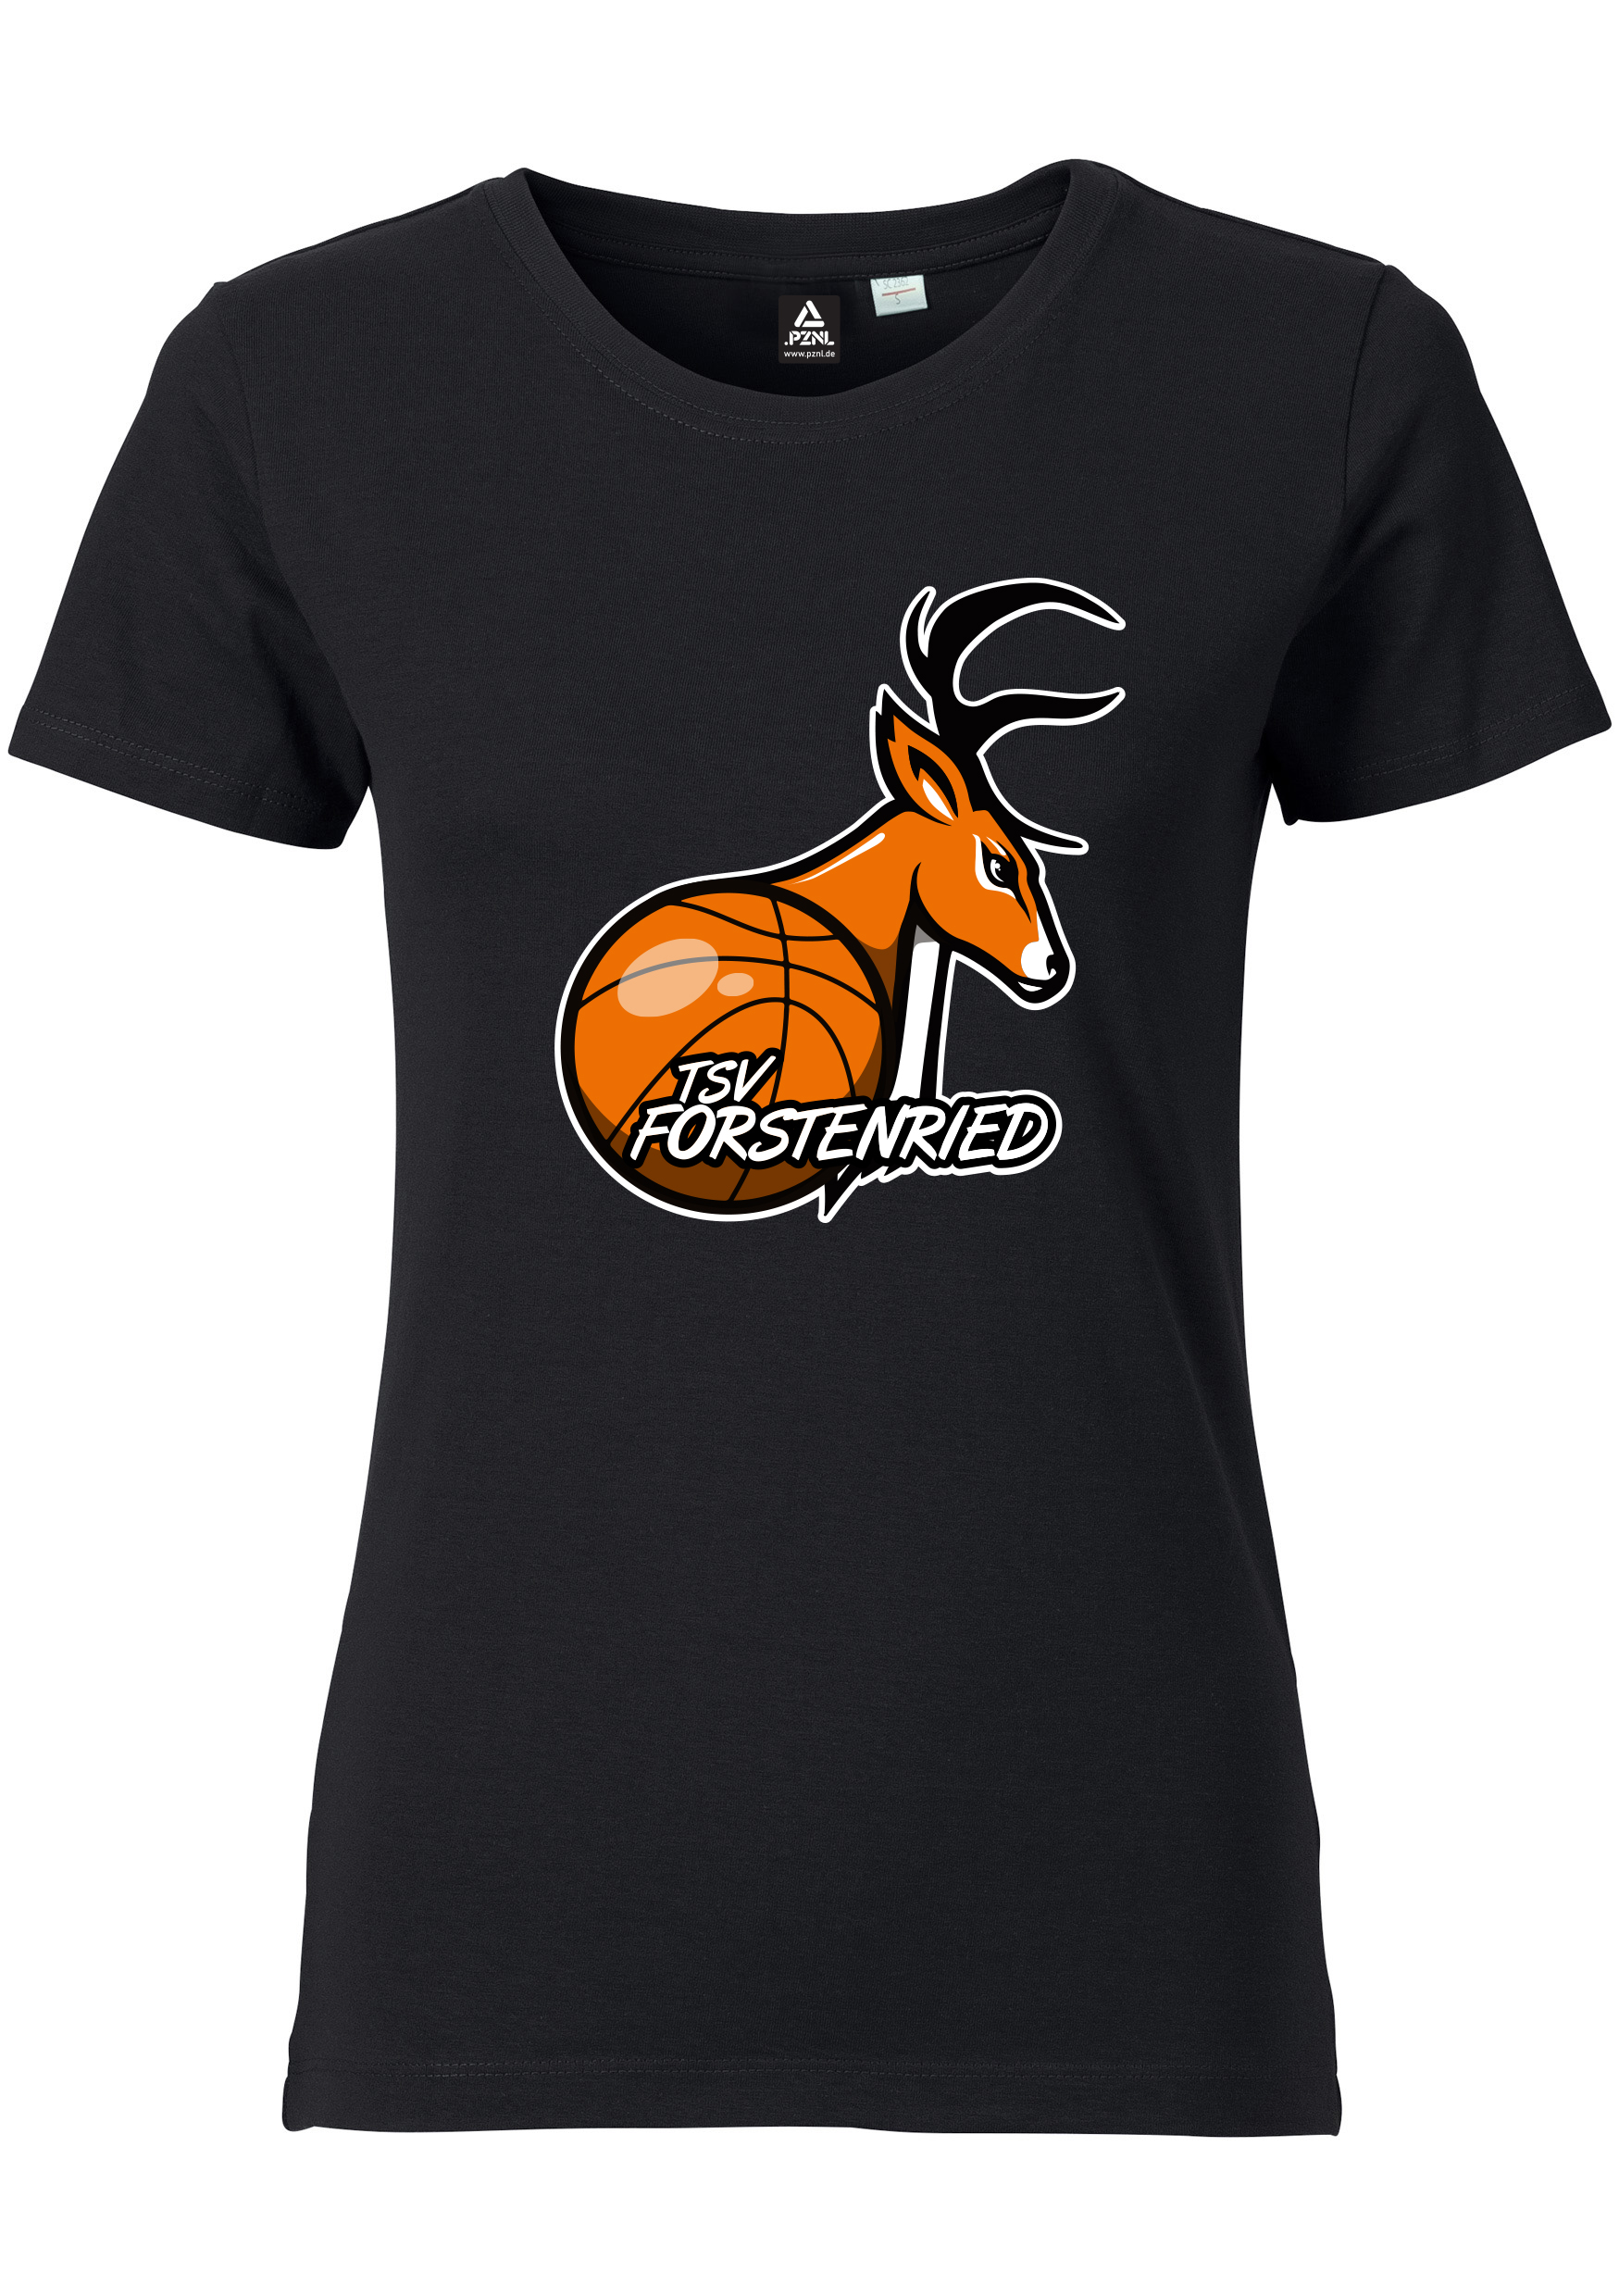 Forstenried Baskets T-Shirt Damen großes Logo